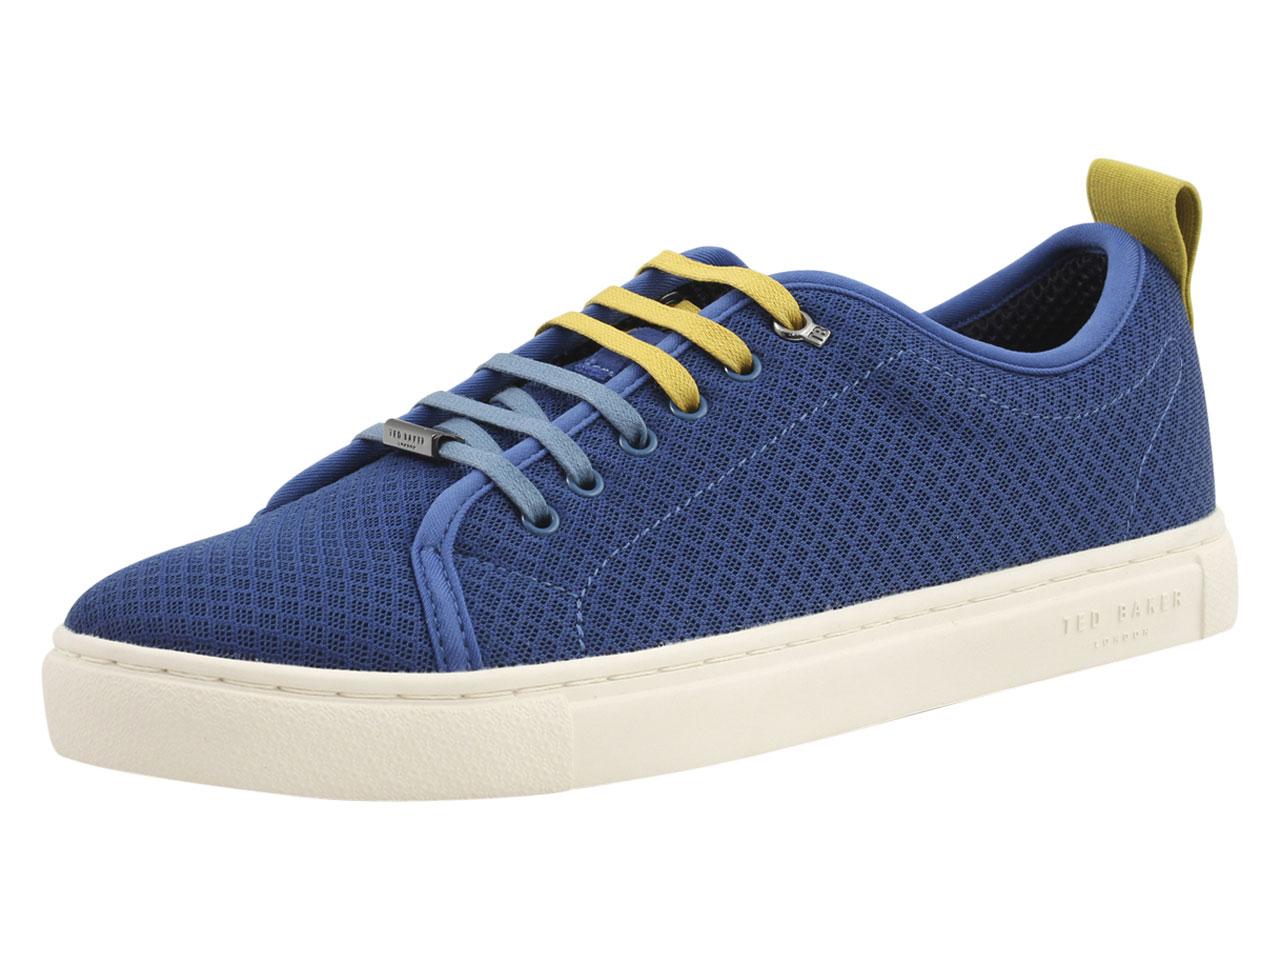 Ted Baker Men's Lannse Fashion Sneakers Shoes - Blue - 11 D(M) US